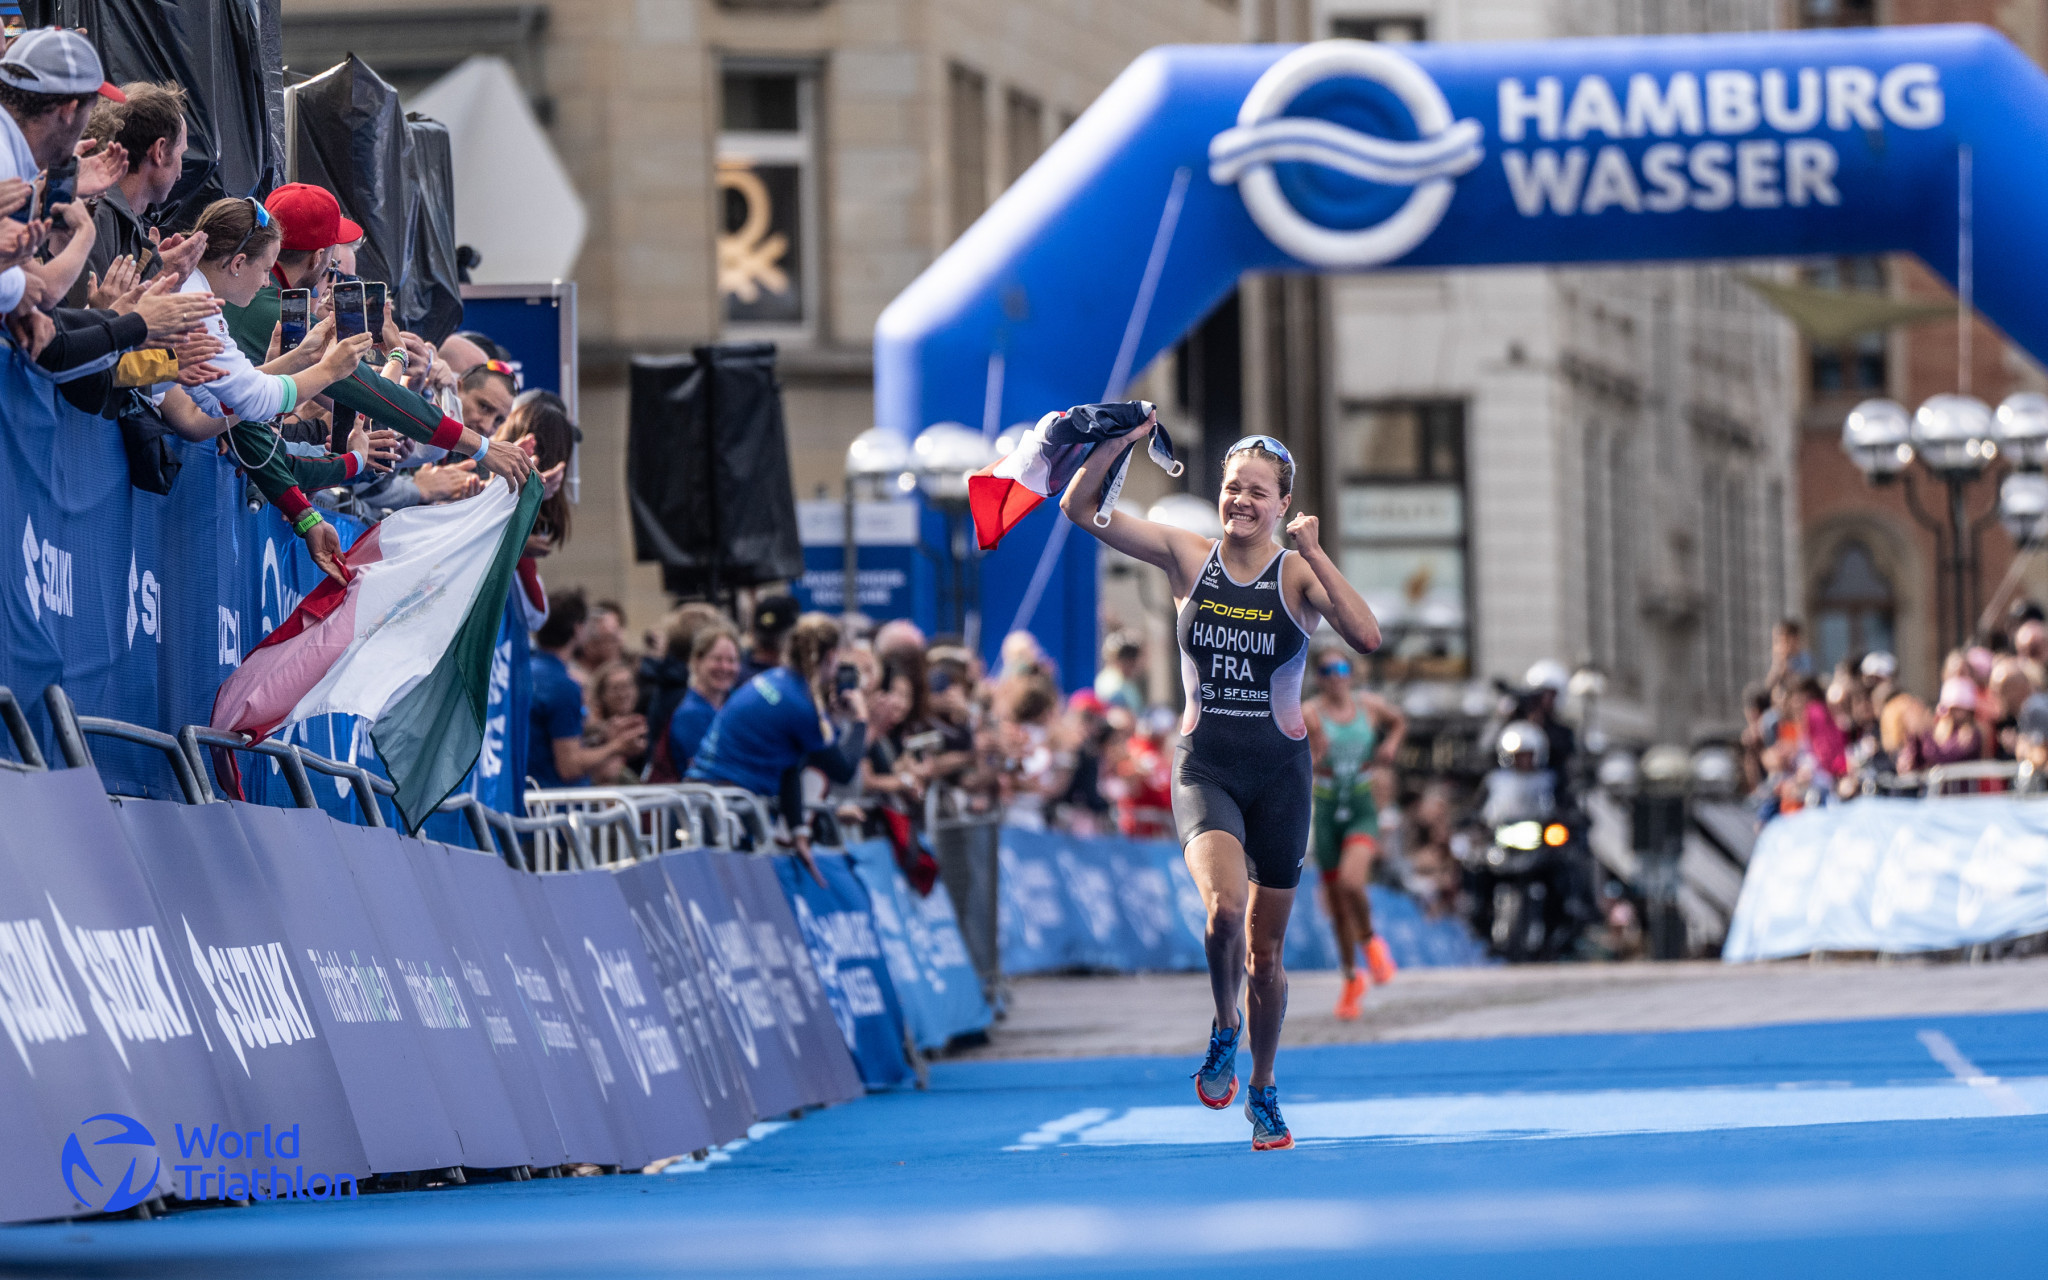 Ilona Hadhoum dominated in the swim to win the junior world title in Hamburg ©World Triathlon